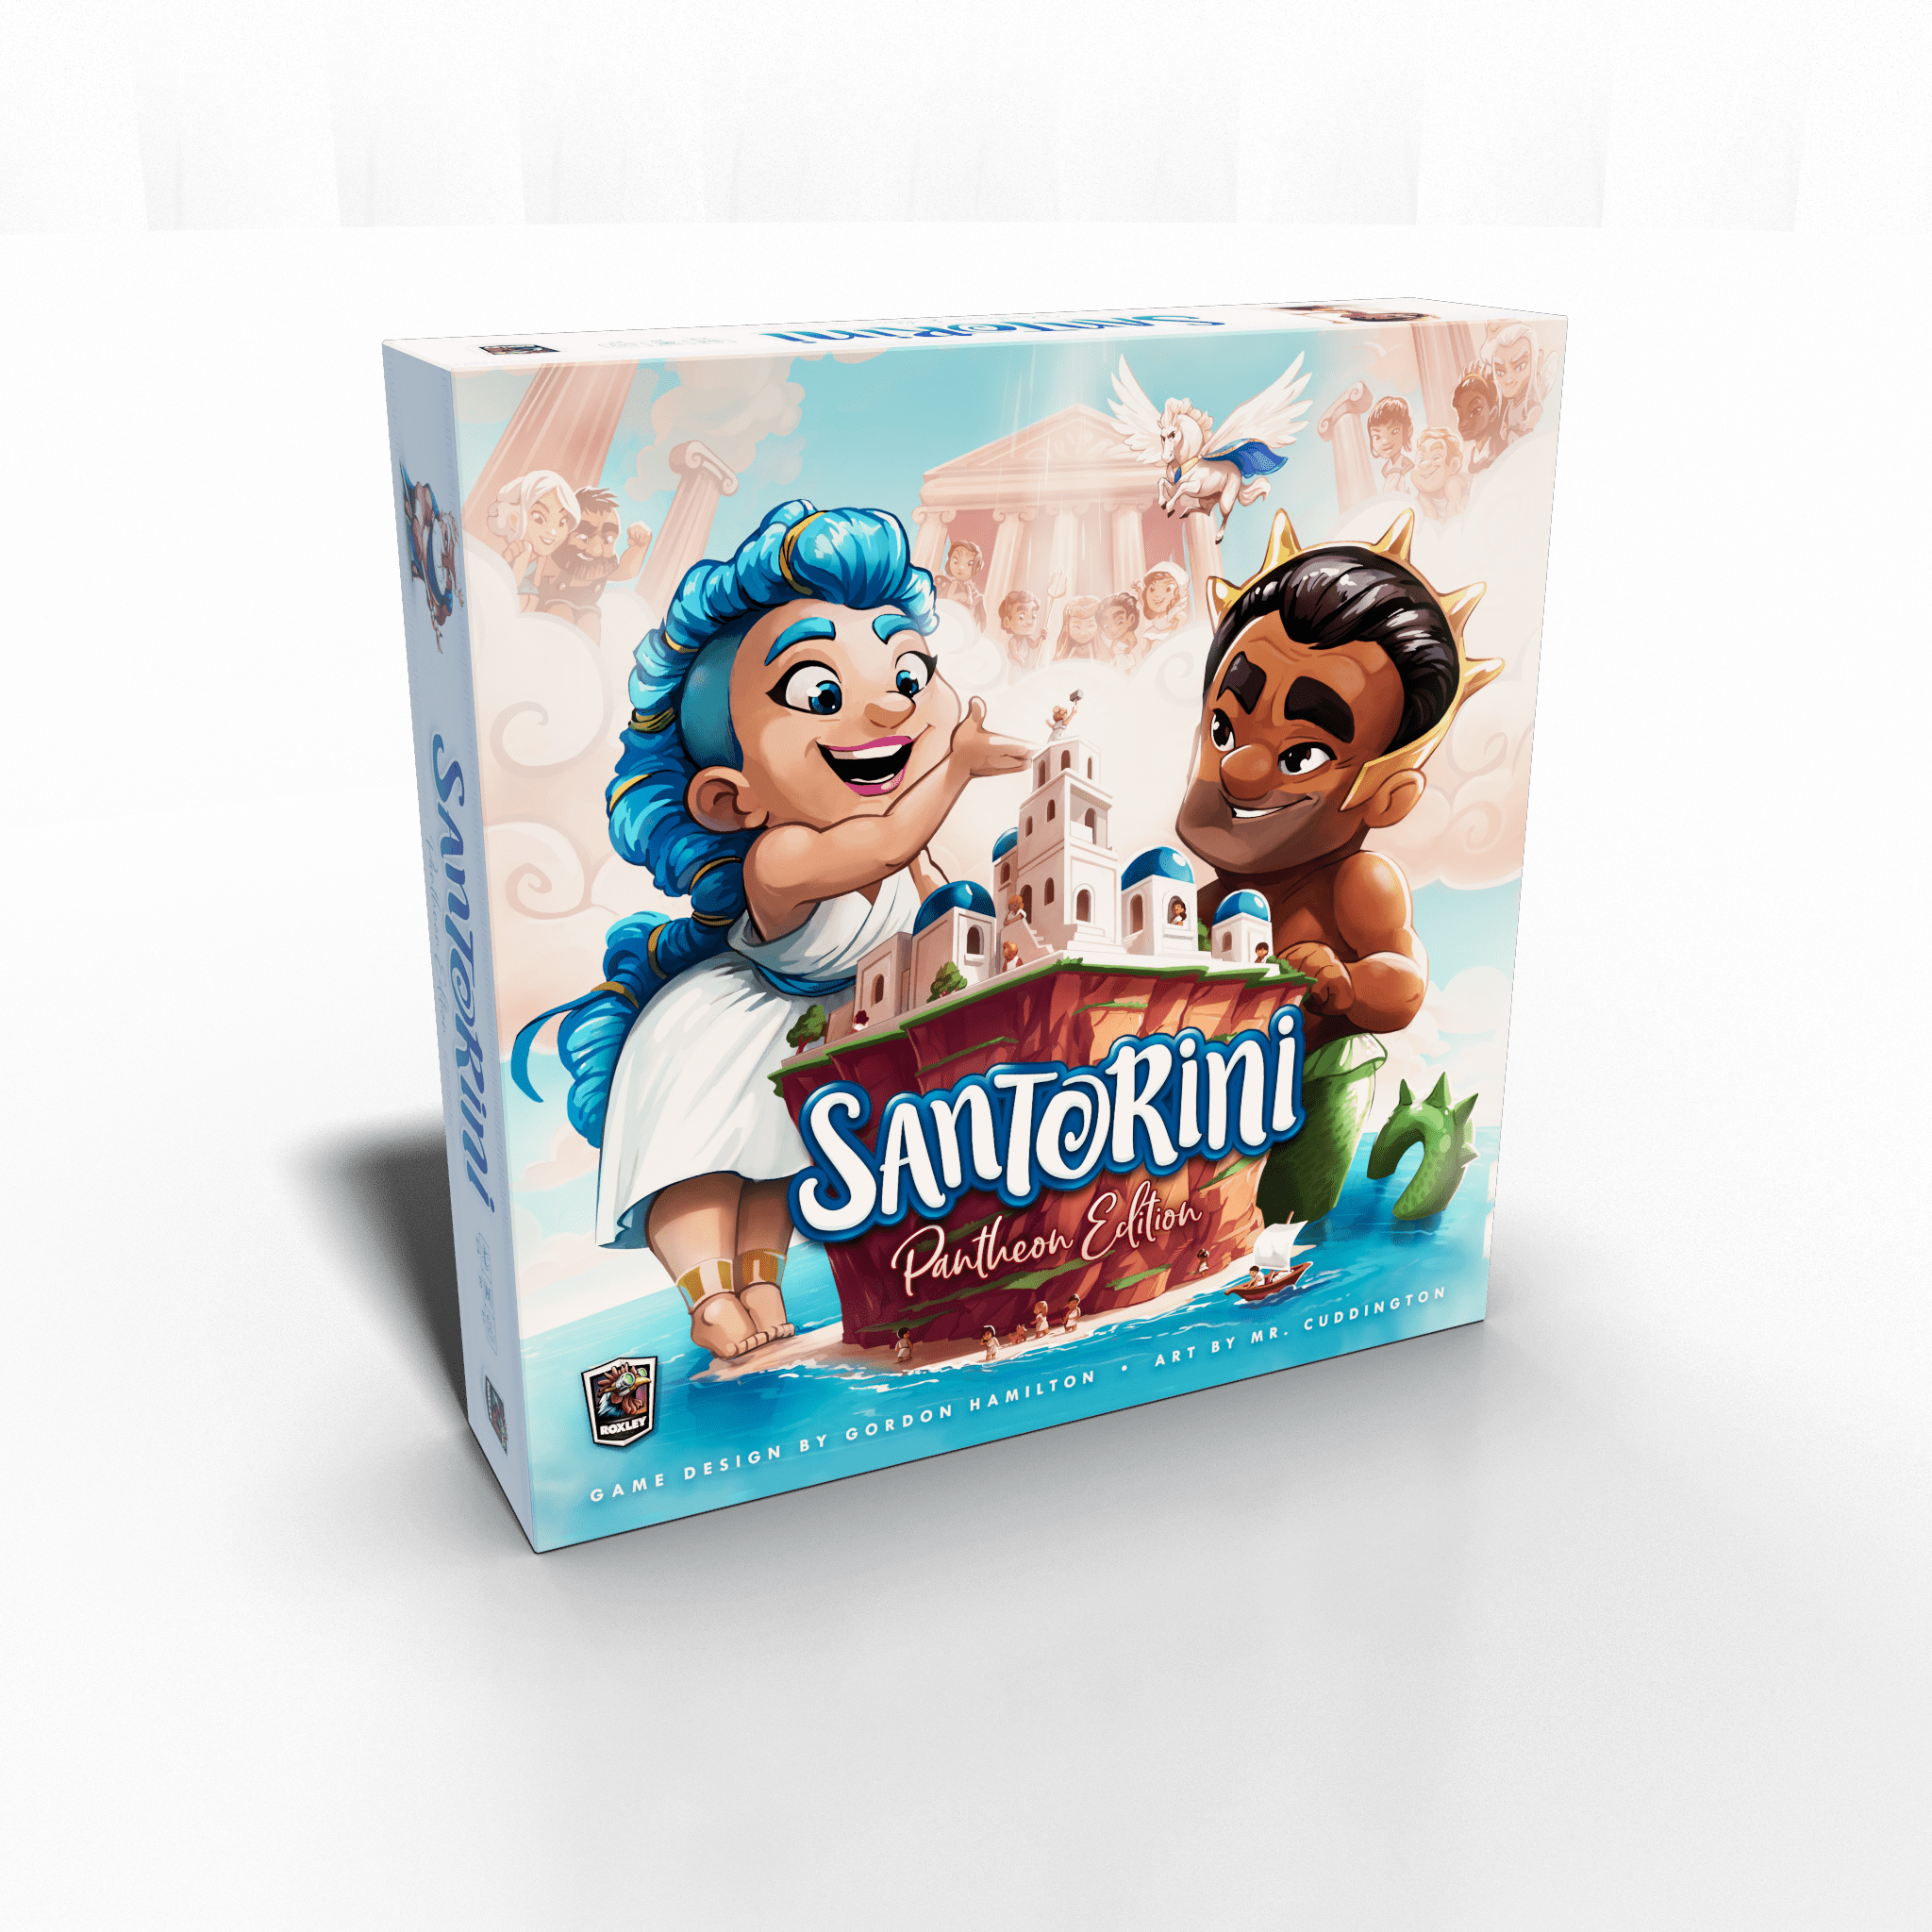 Santorini Pantheon Edition box